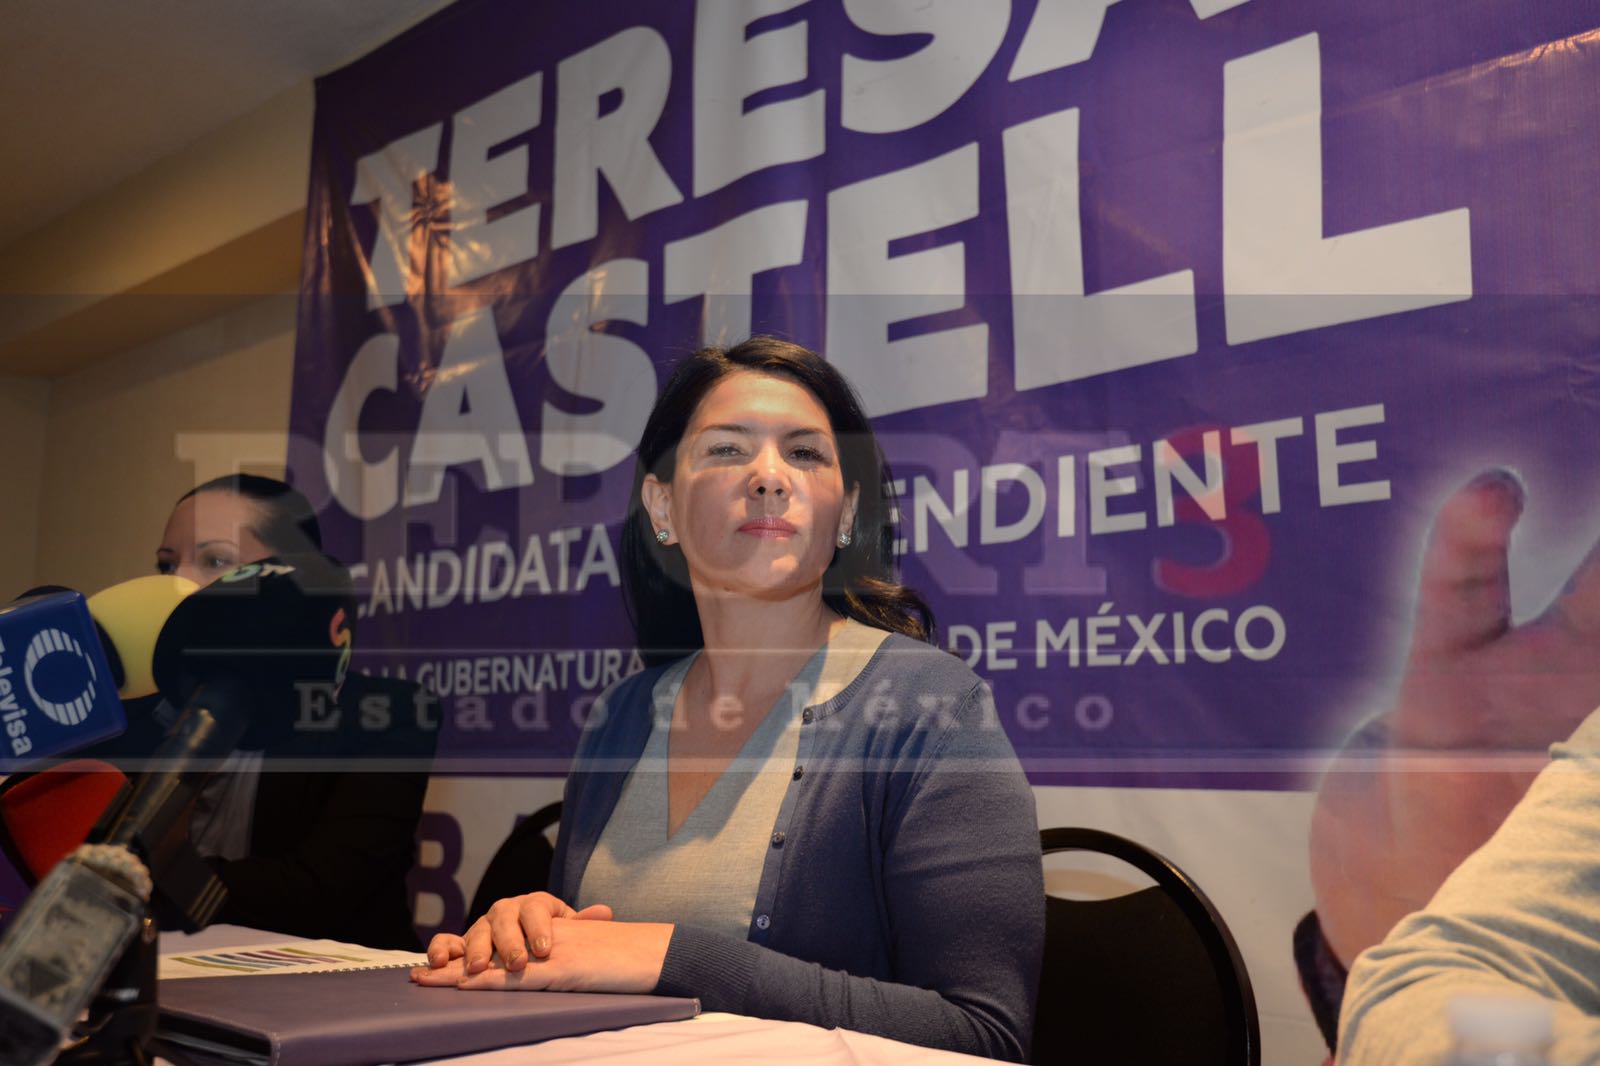 Ofrece Tere Castell cadena perpetua a servidores públicos corruptos